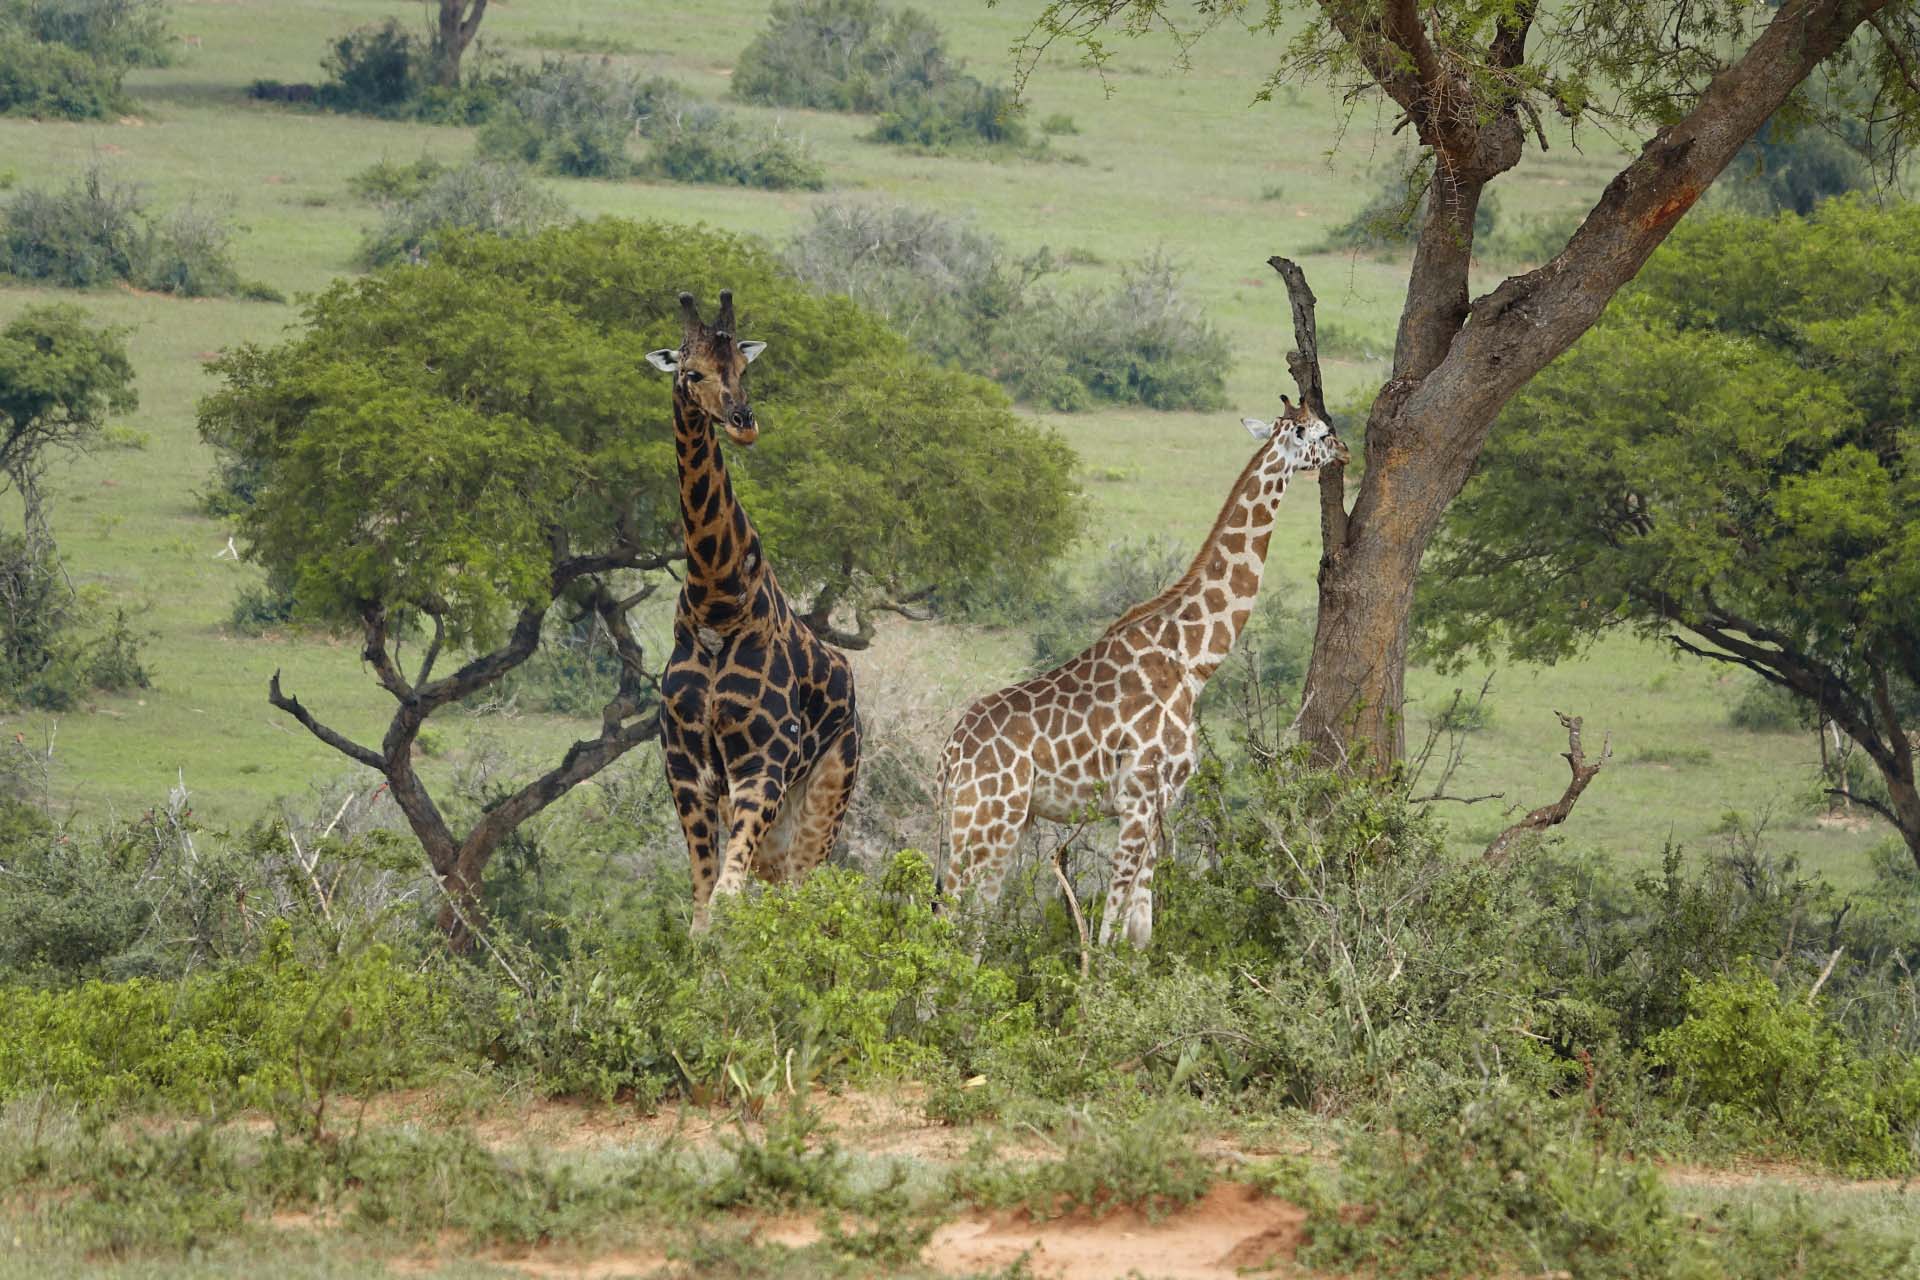 Giraffes in Uganda wild

IMAGE: Sarah Robinson 2017